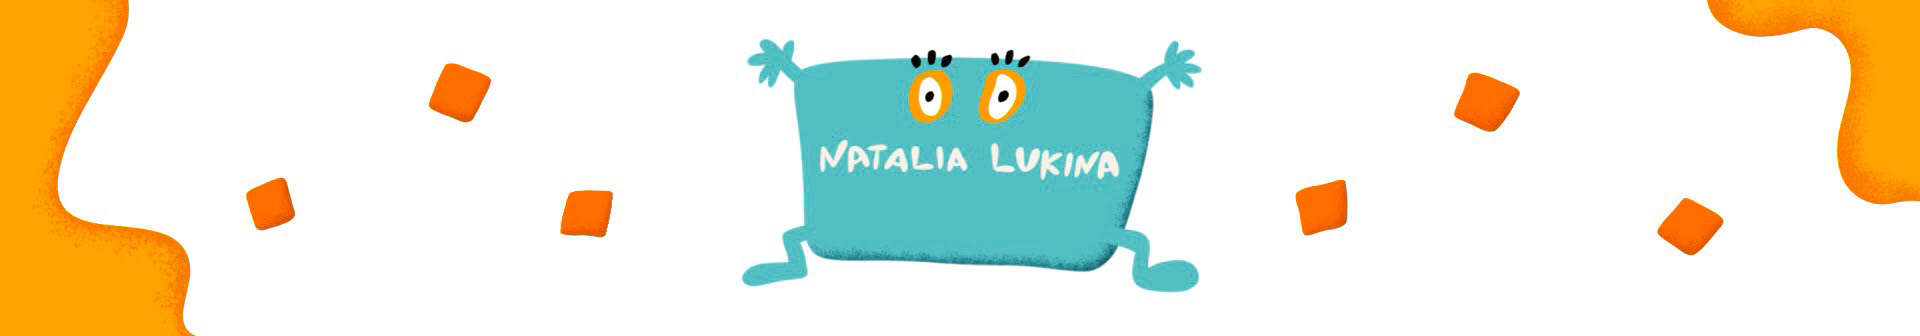 Natalia Lukina's profile banner